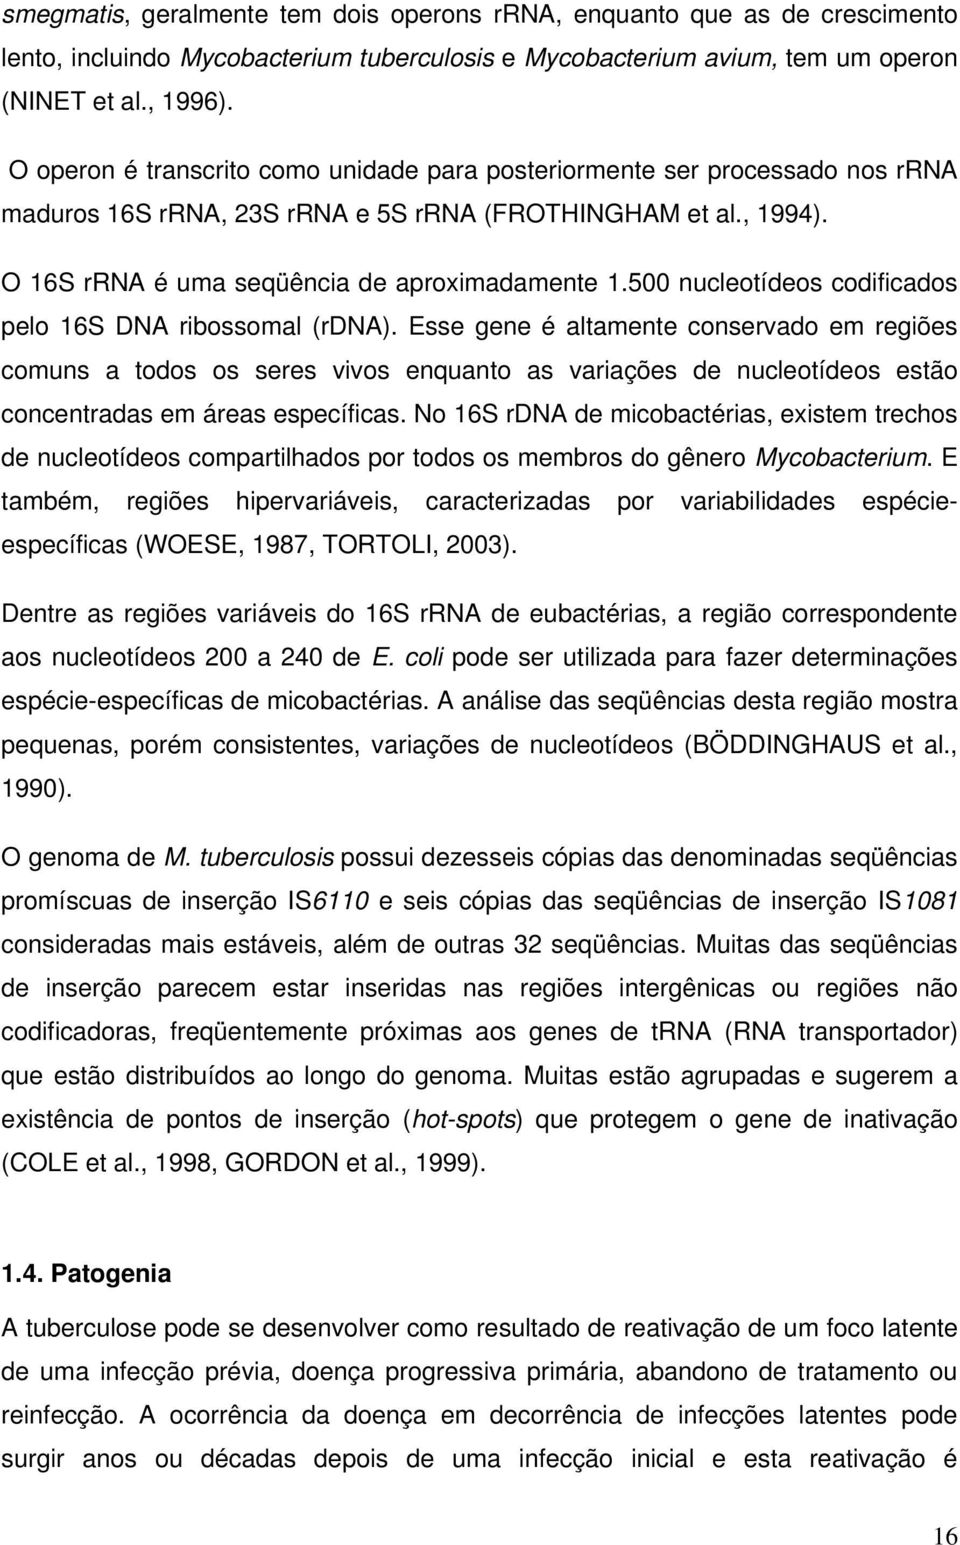 500 nucleotídeos codificados pelo 16S DNA ribossomal (rdna).